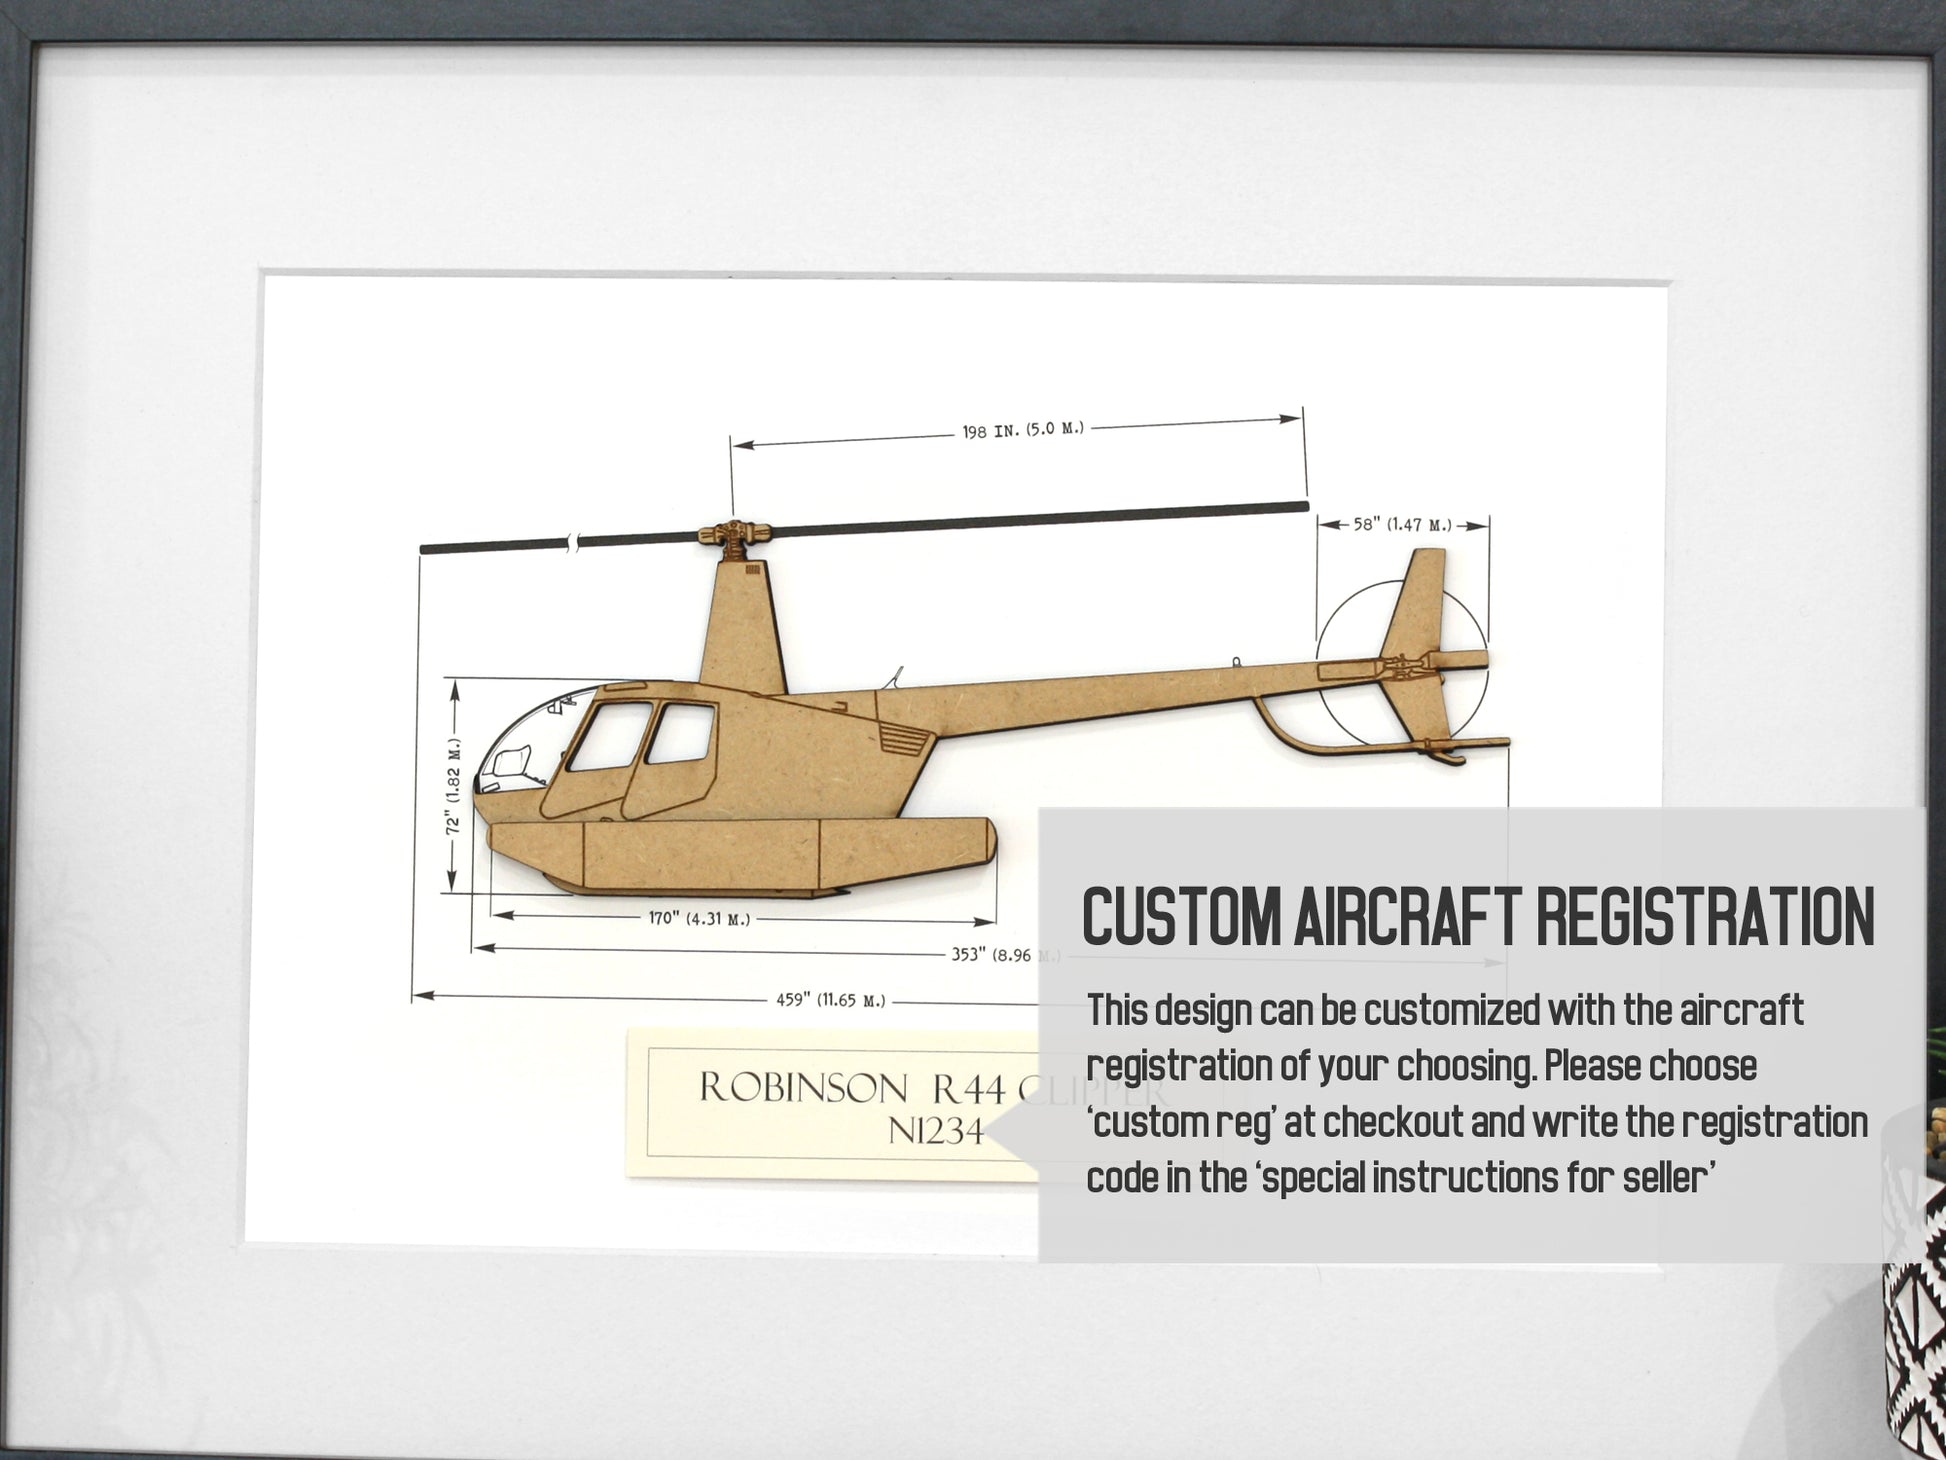 Robinson R44 Clipper custom helicopter art